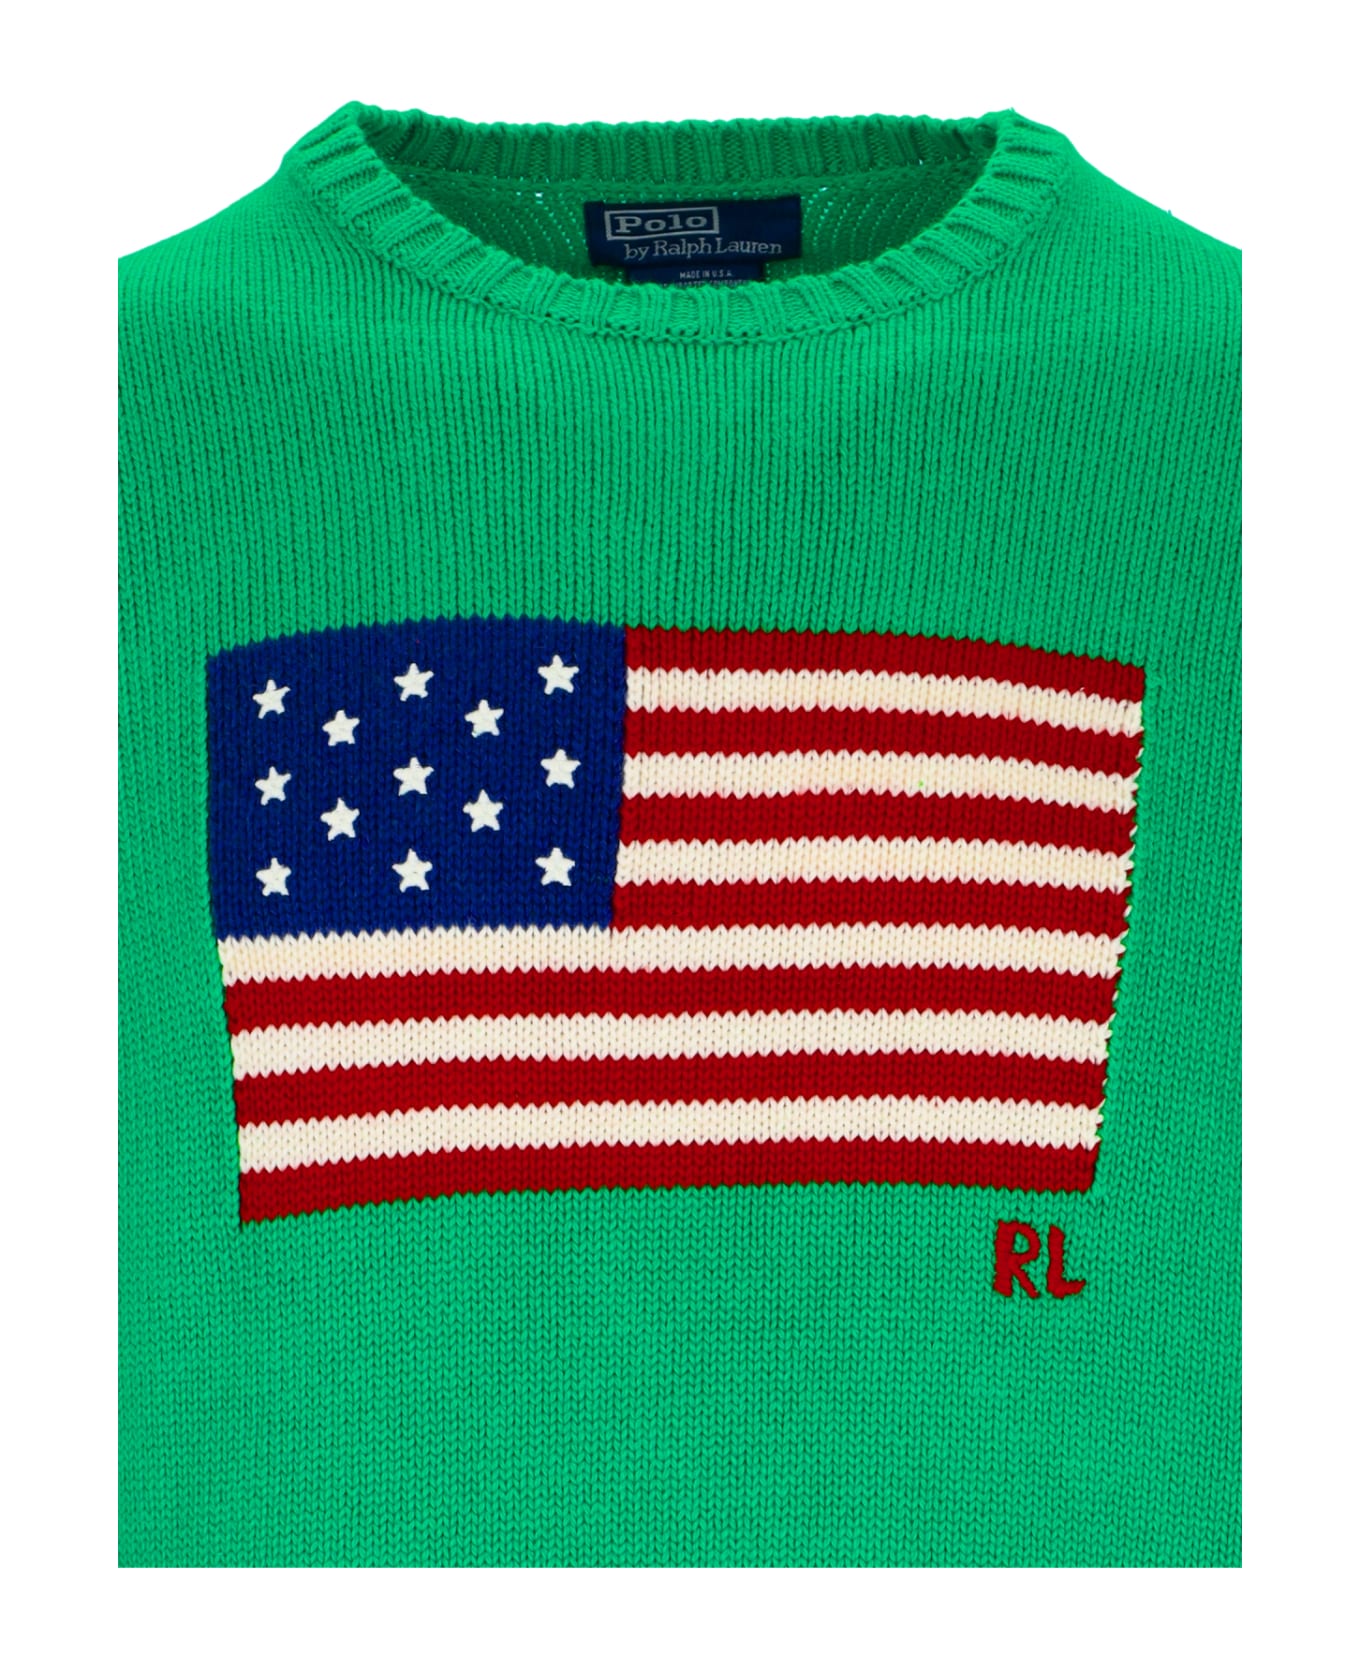 Ralph Lauren Iconic Embroidery Sweater - GREEN ニットウェア